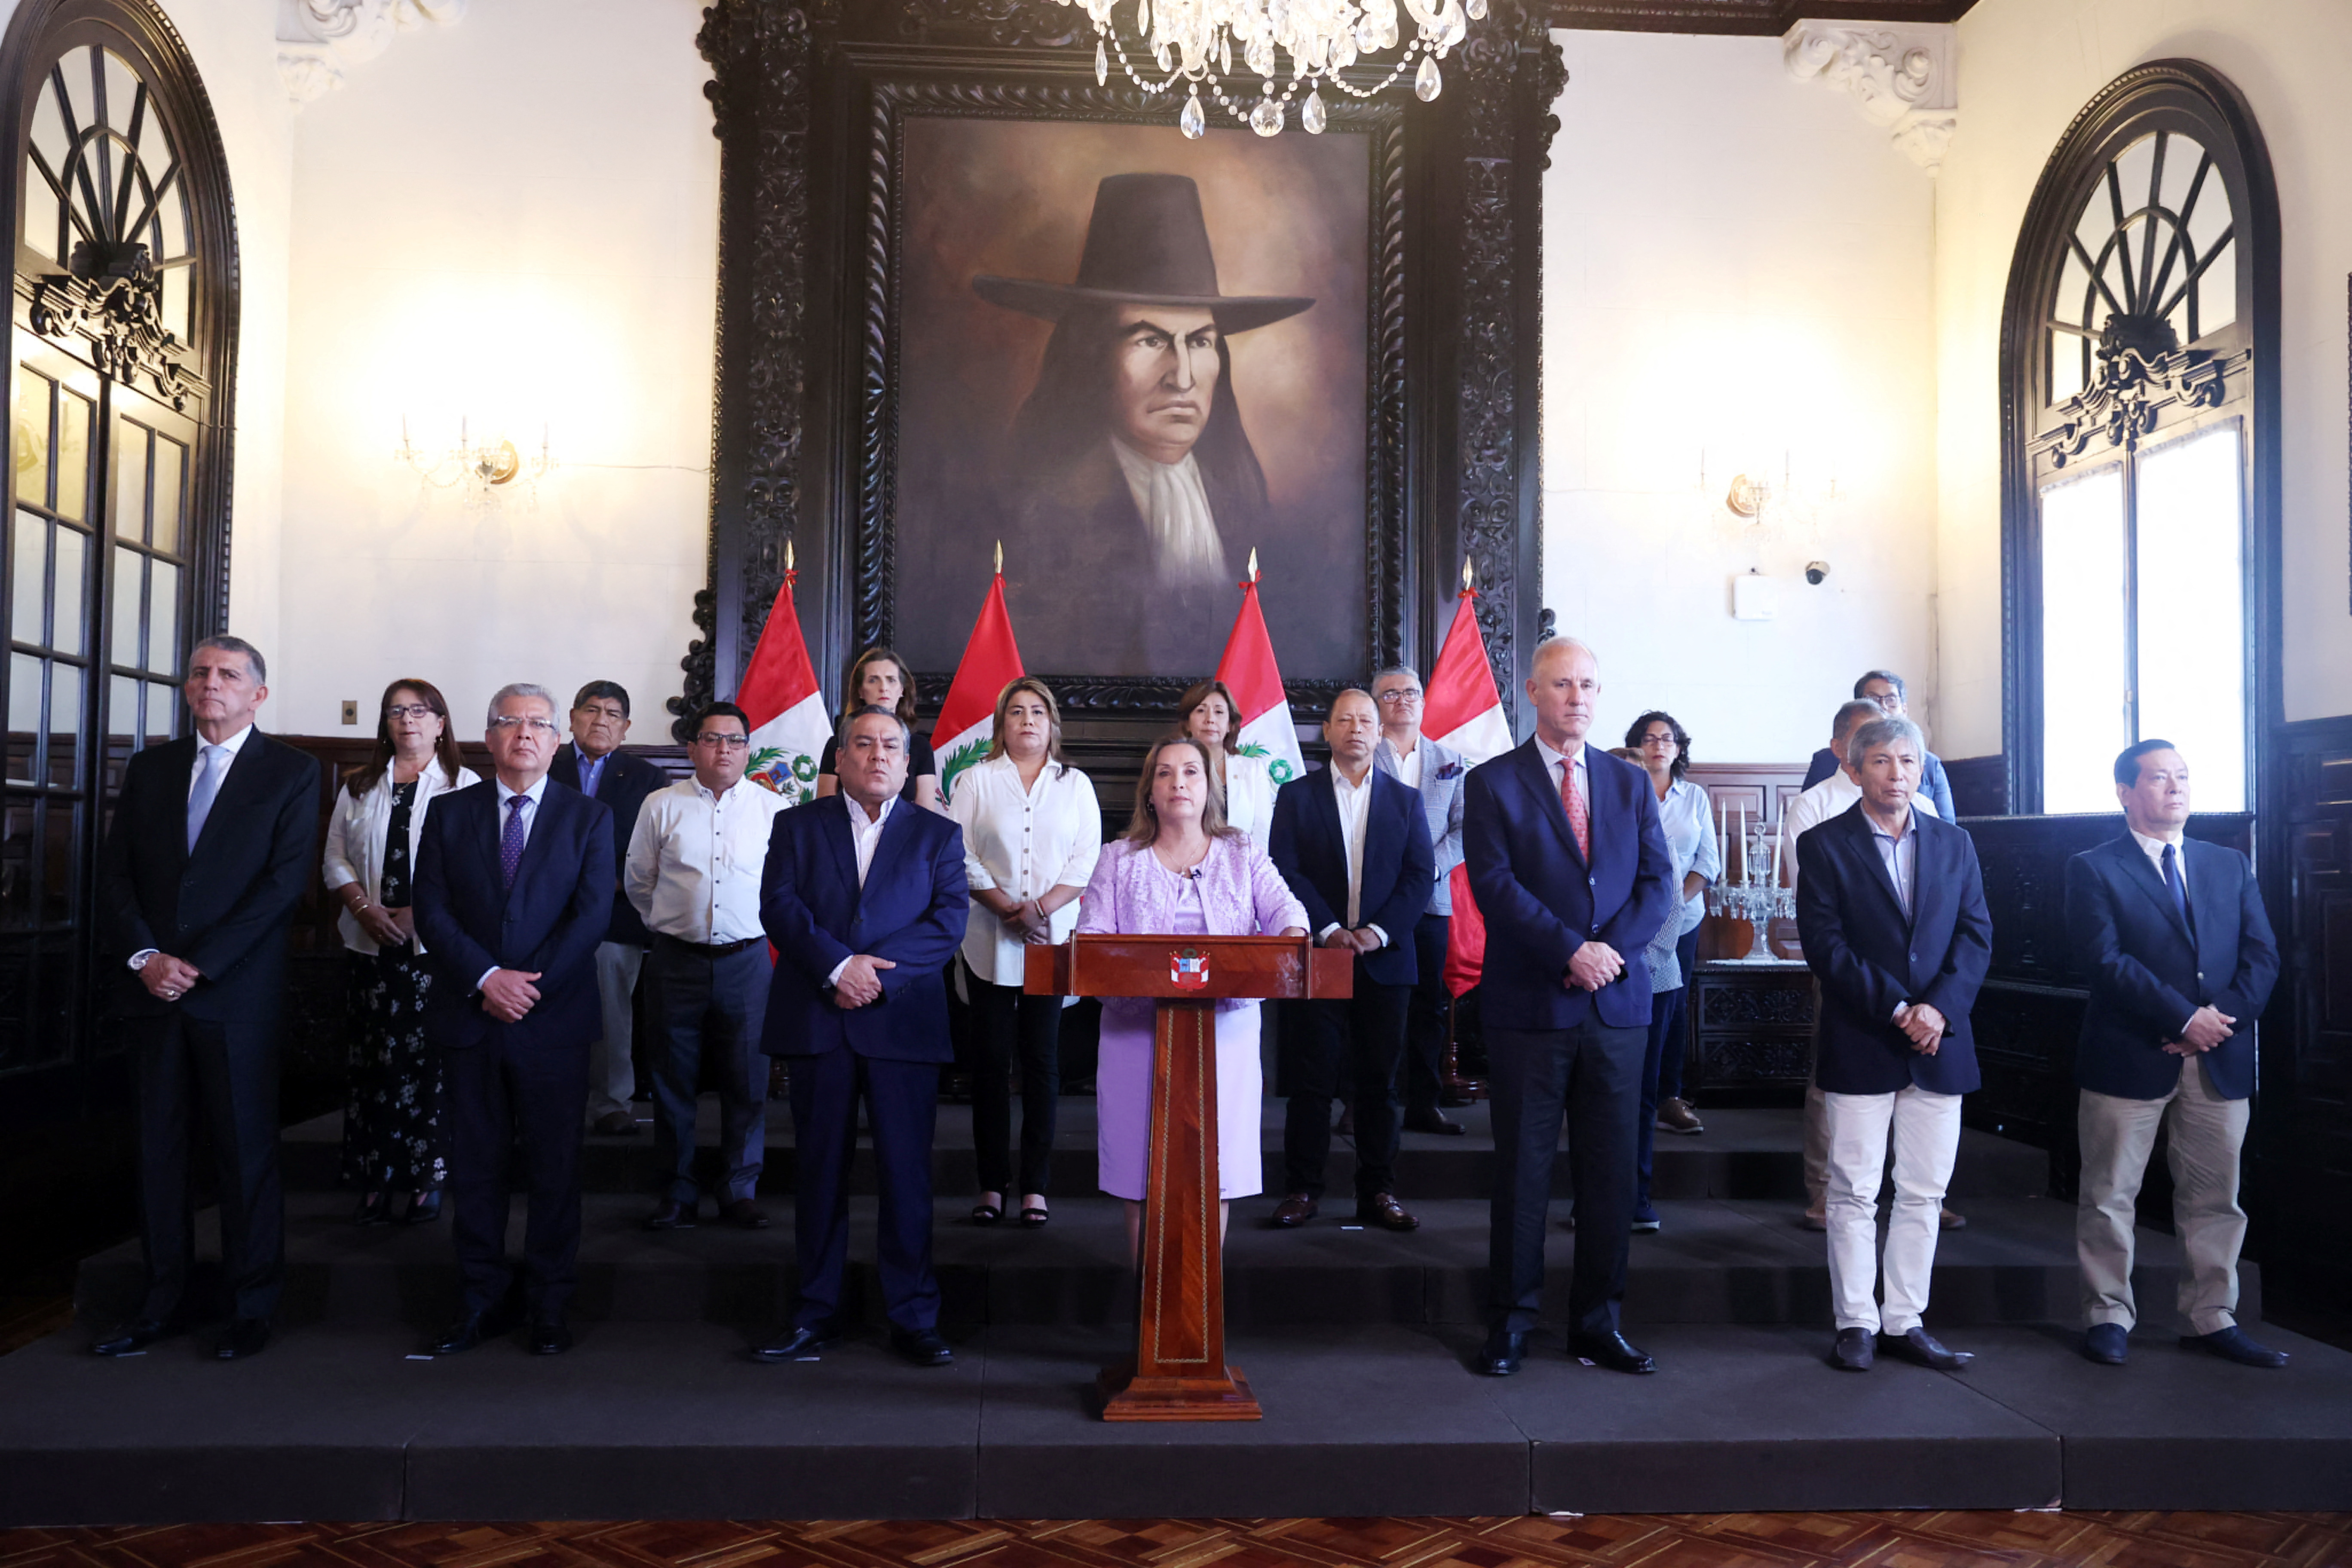 Peru's President Dina Boluarte addresses the nation after Peruvian prosecutors raided her home, in Lima